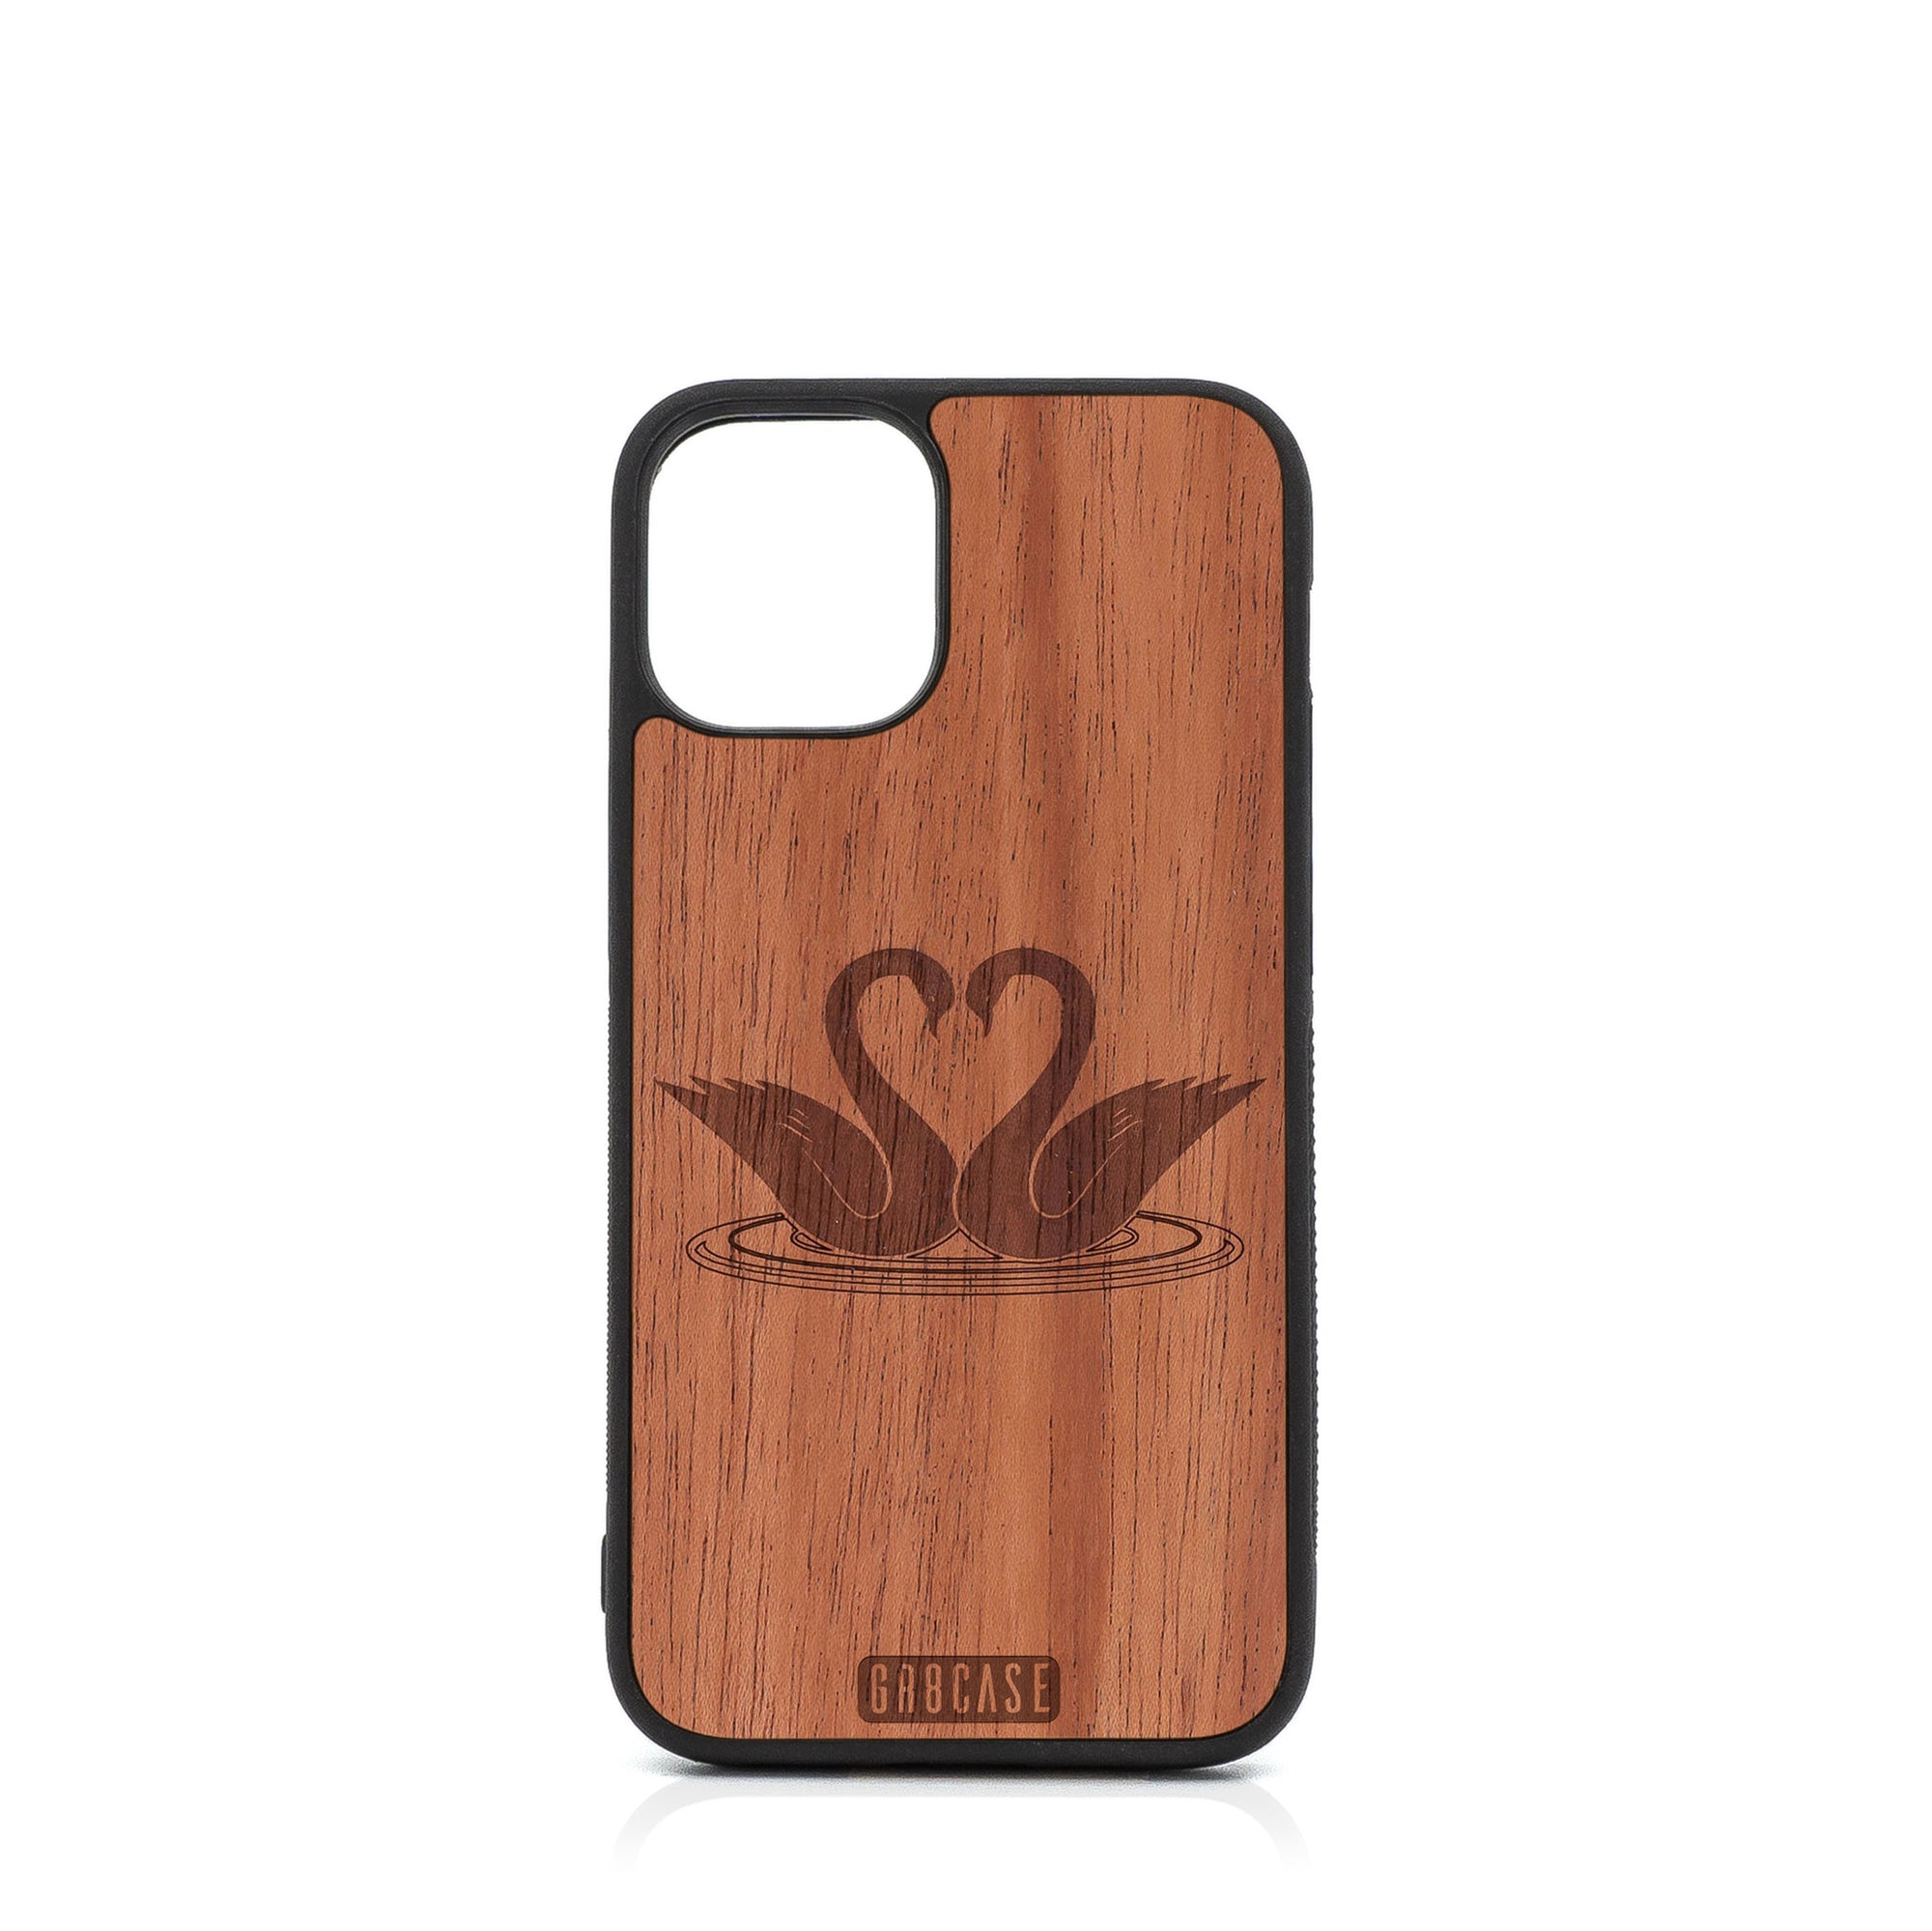 Swans Design Wood Case For iPhone 12 Mini